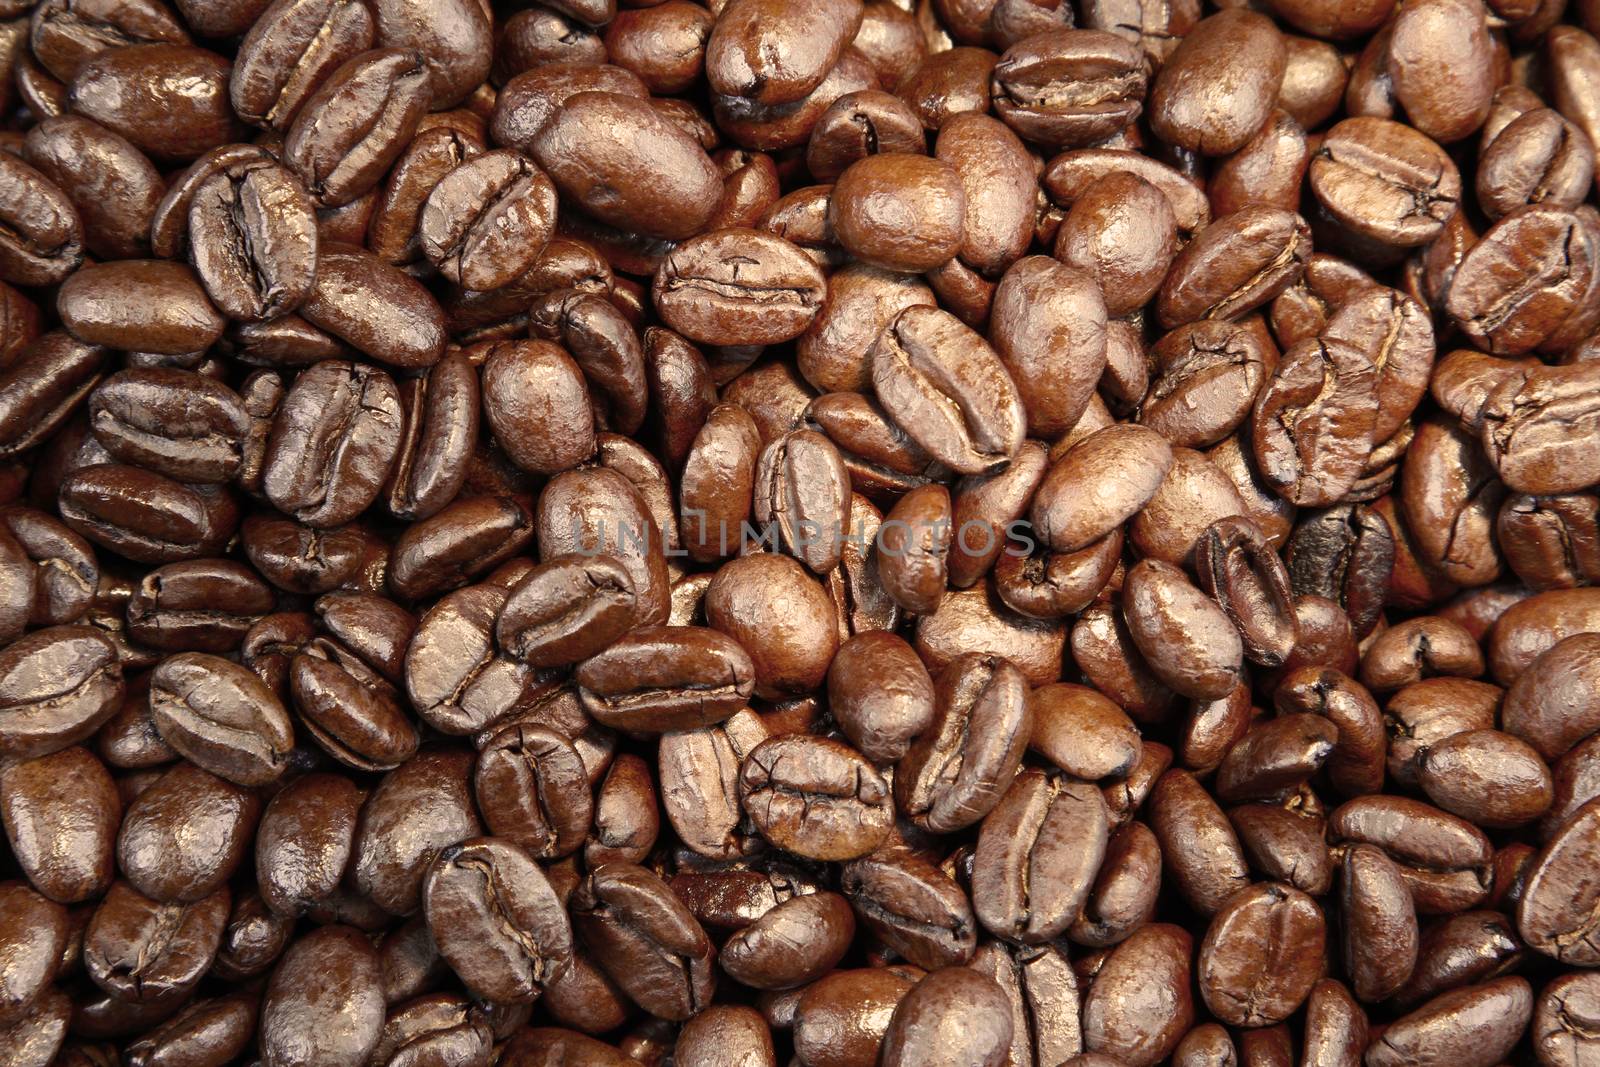 Coffee beans by Stillfx